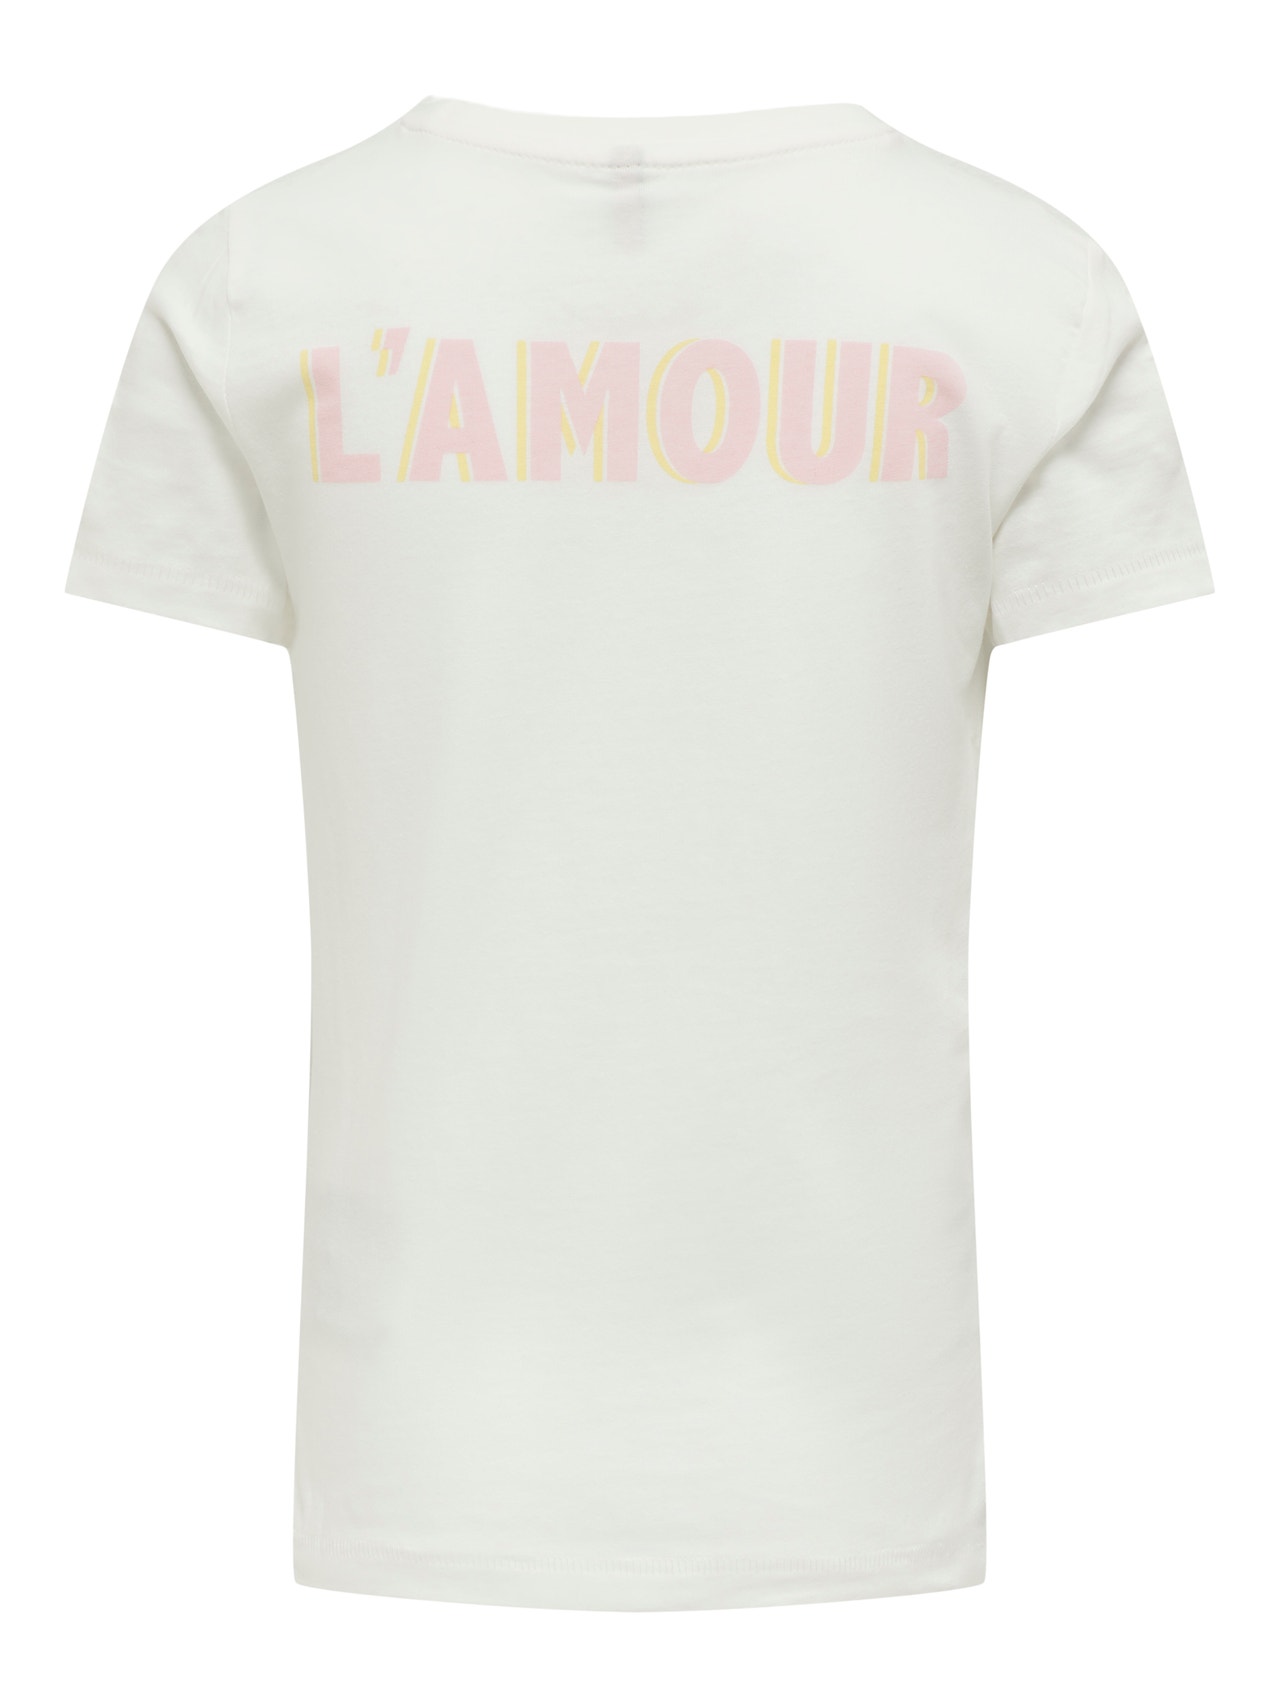 ONLY Camisetas Corte slim Cuello redondo -Cloud Dancer - 15292353